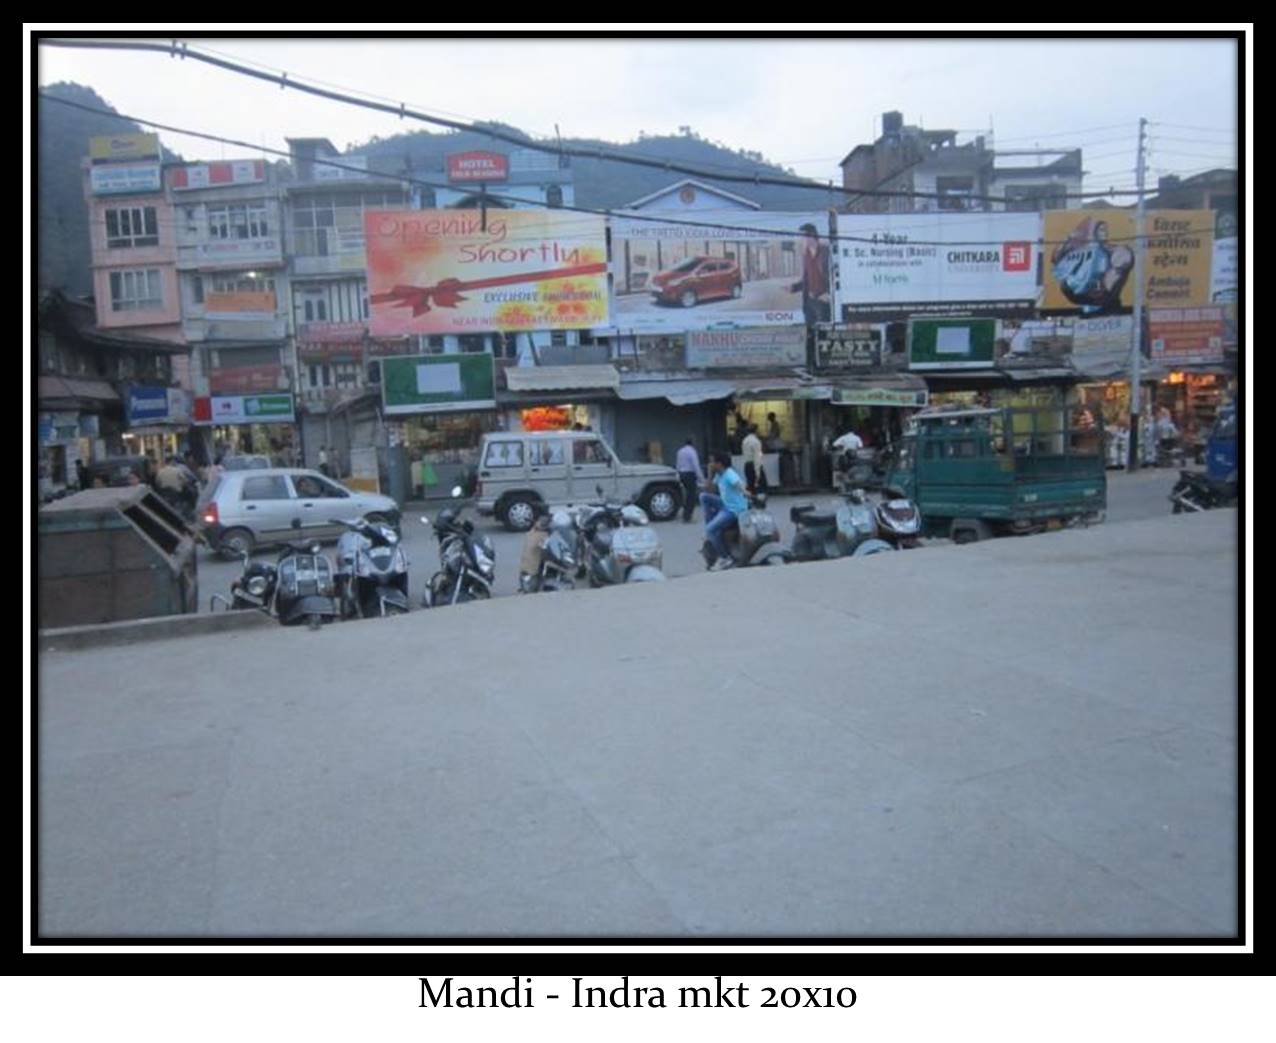 Indera market, Mandi